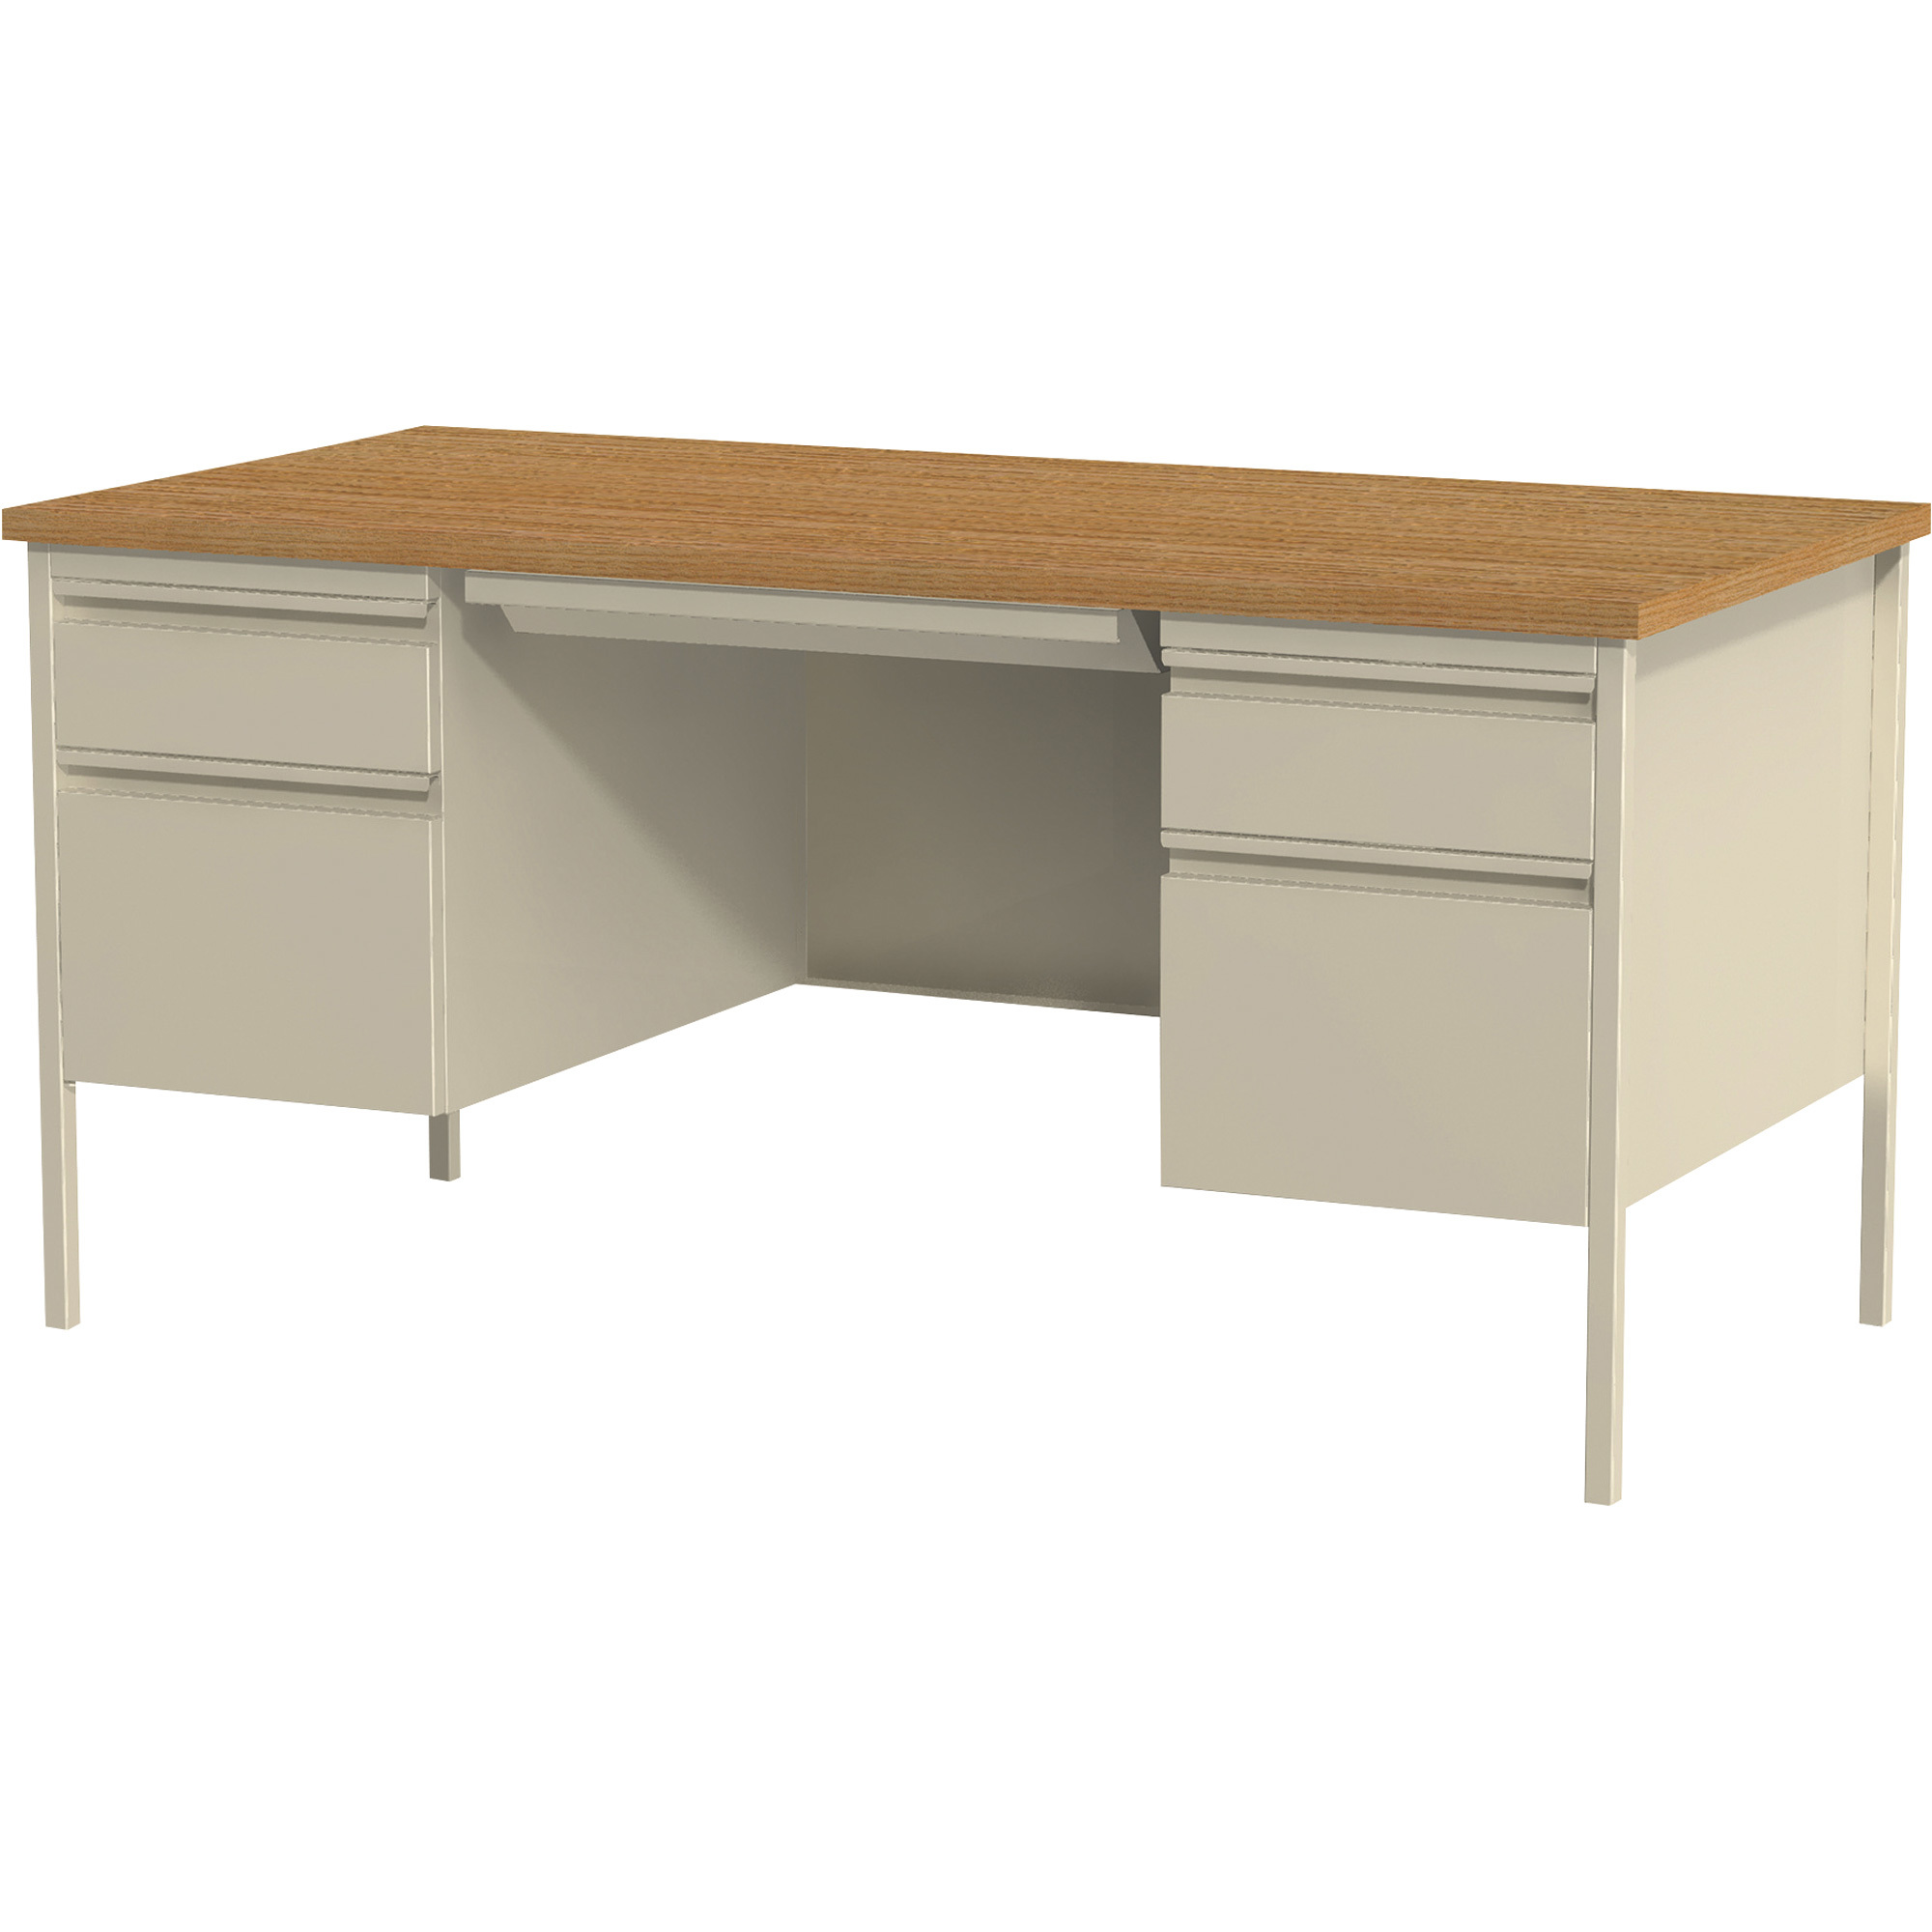 Traditional Pedestal Desk — Putty/Oak, 66Inch W x 30Inch D x 29 1/2Inch H, Model - Hirsh Industries 20100